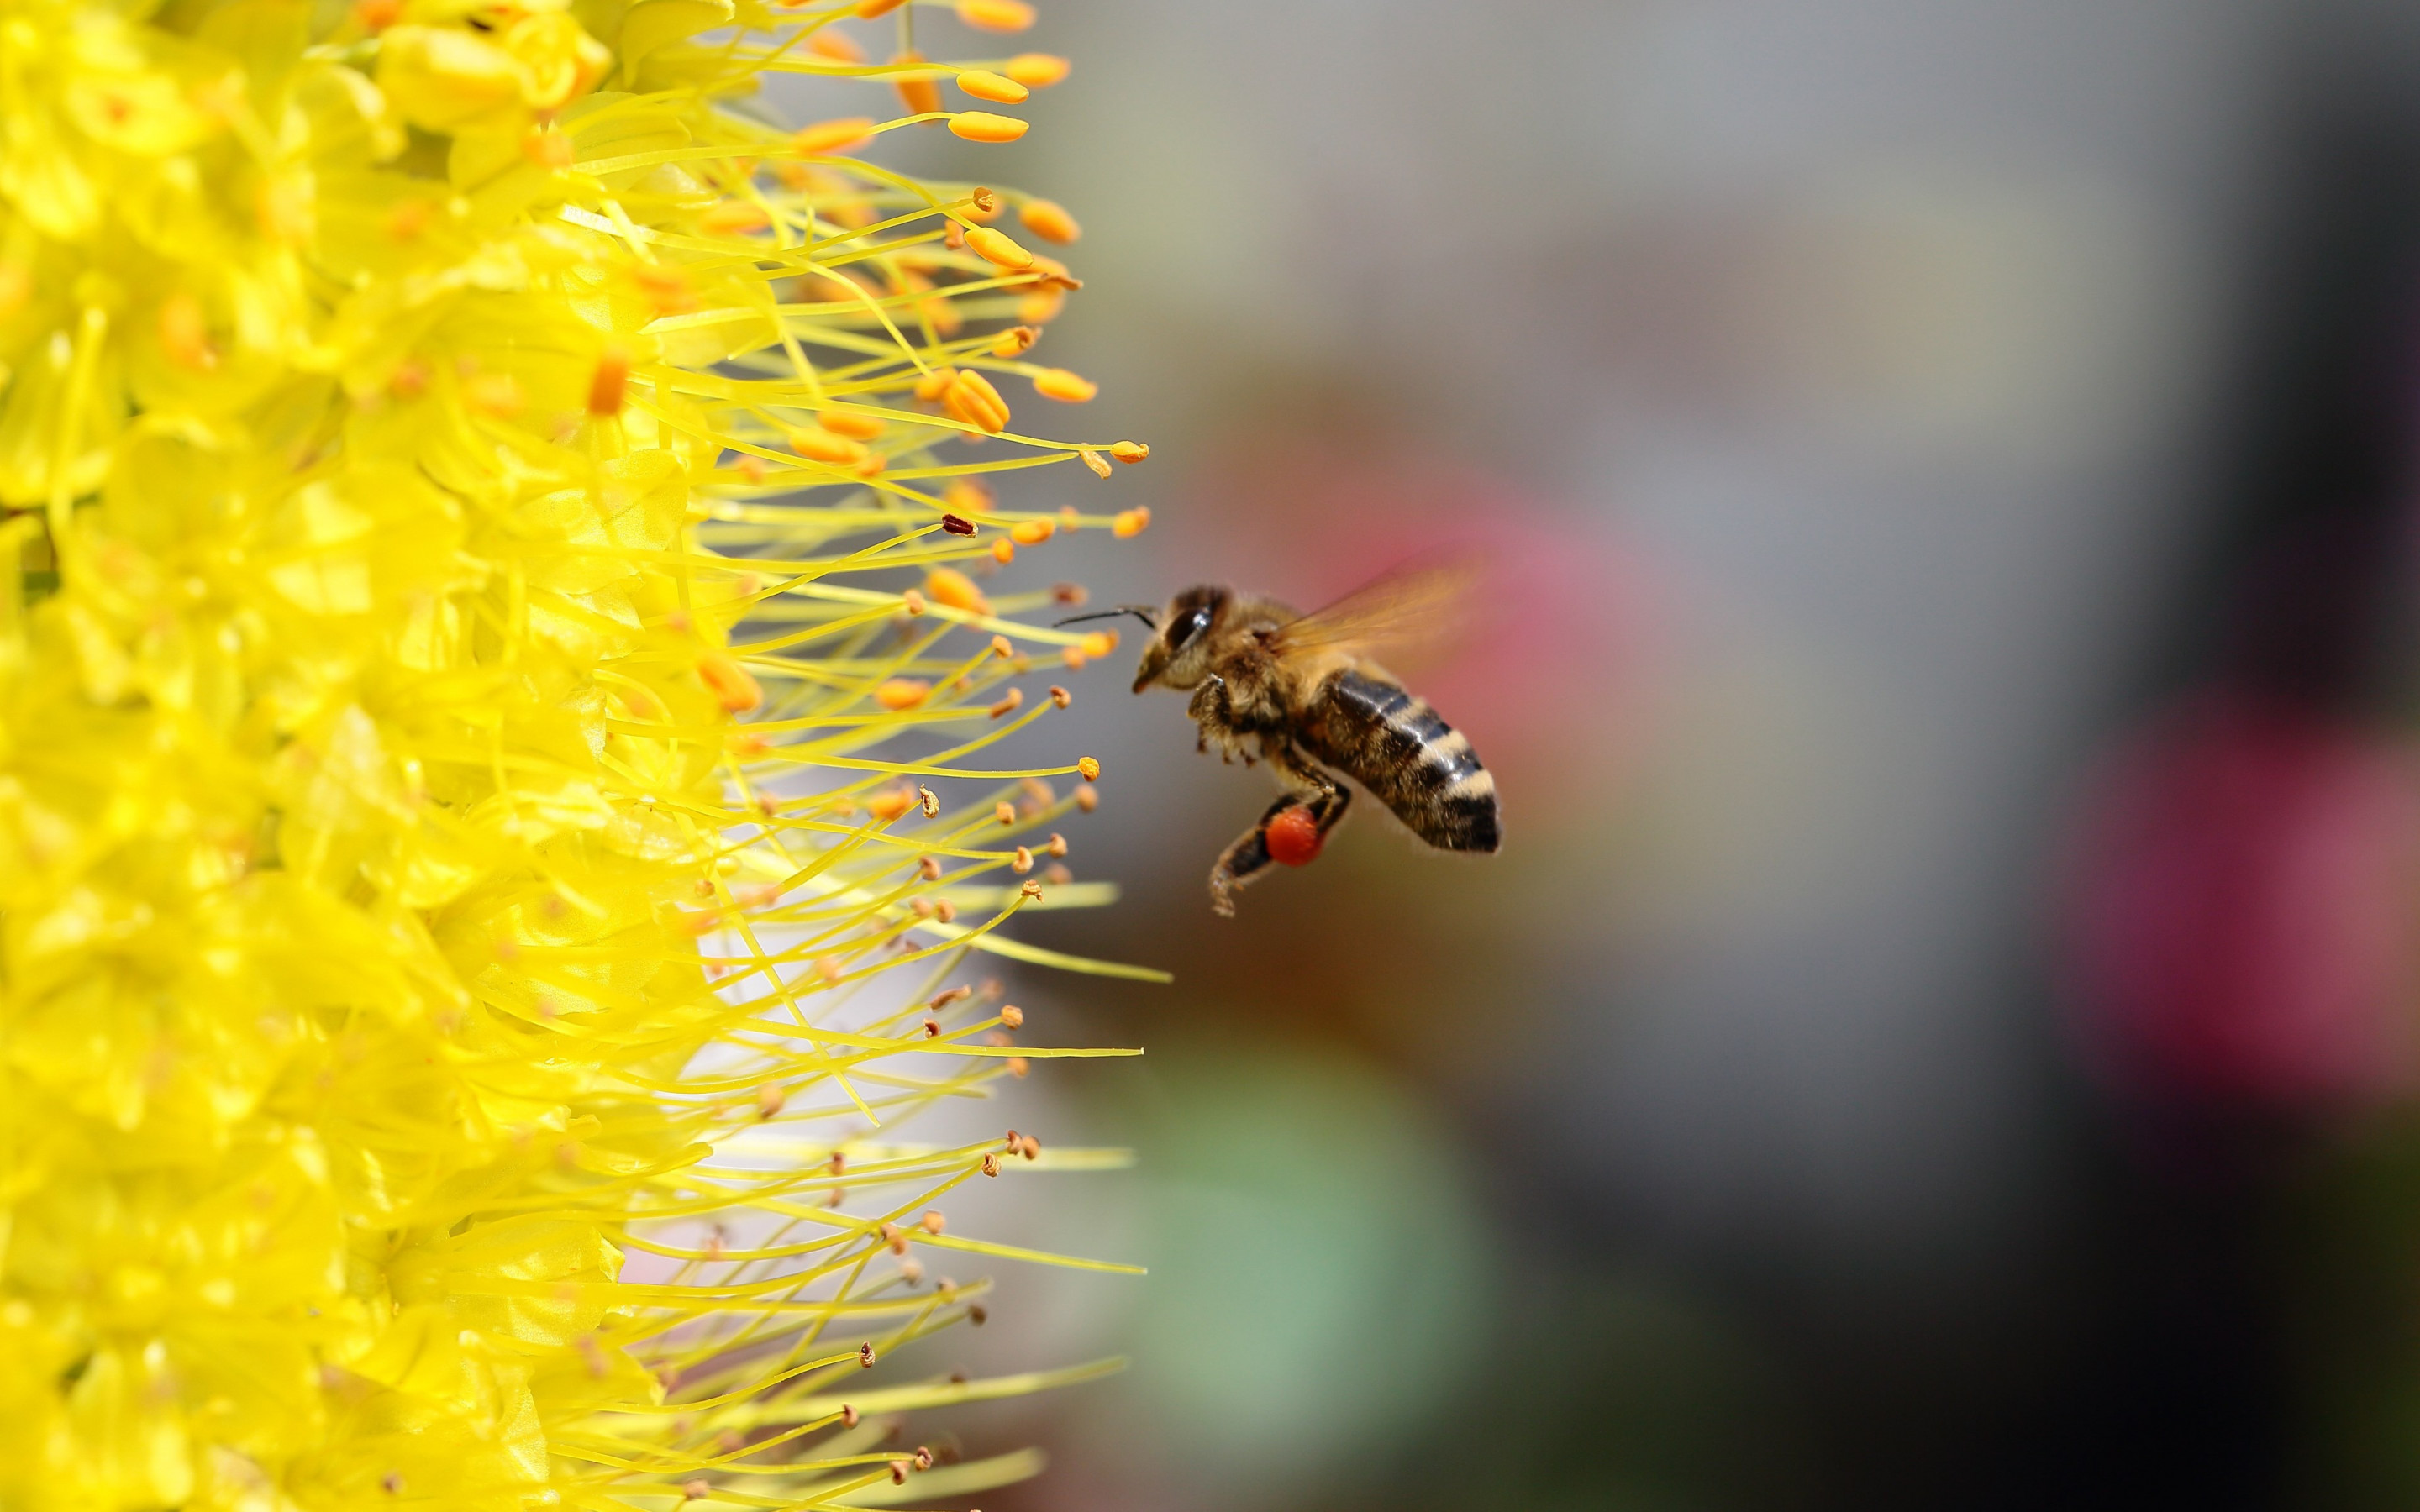 Download wallpaper: Bee collecting pollen for honey 2880x1800